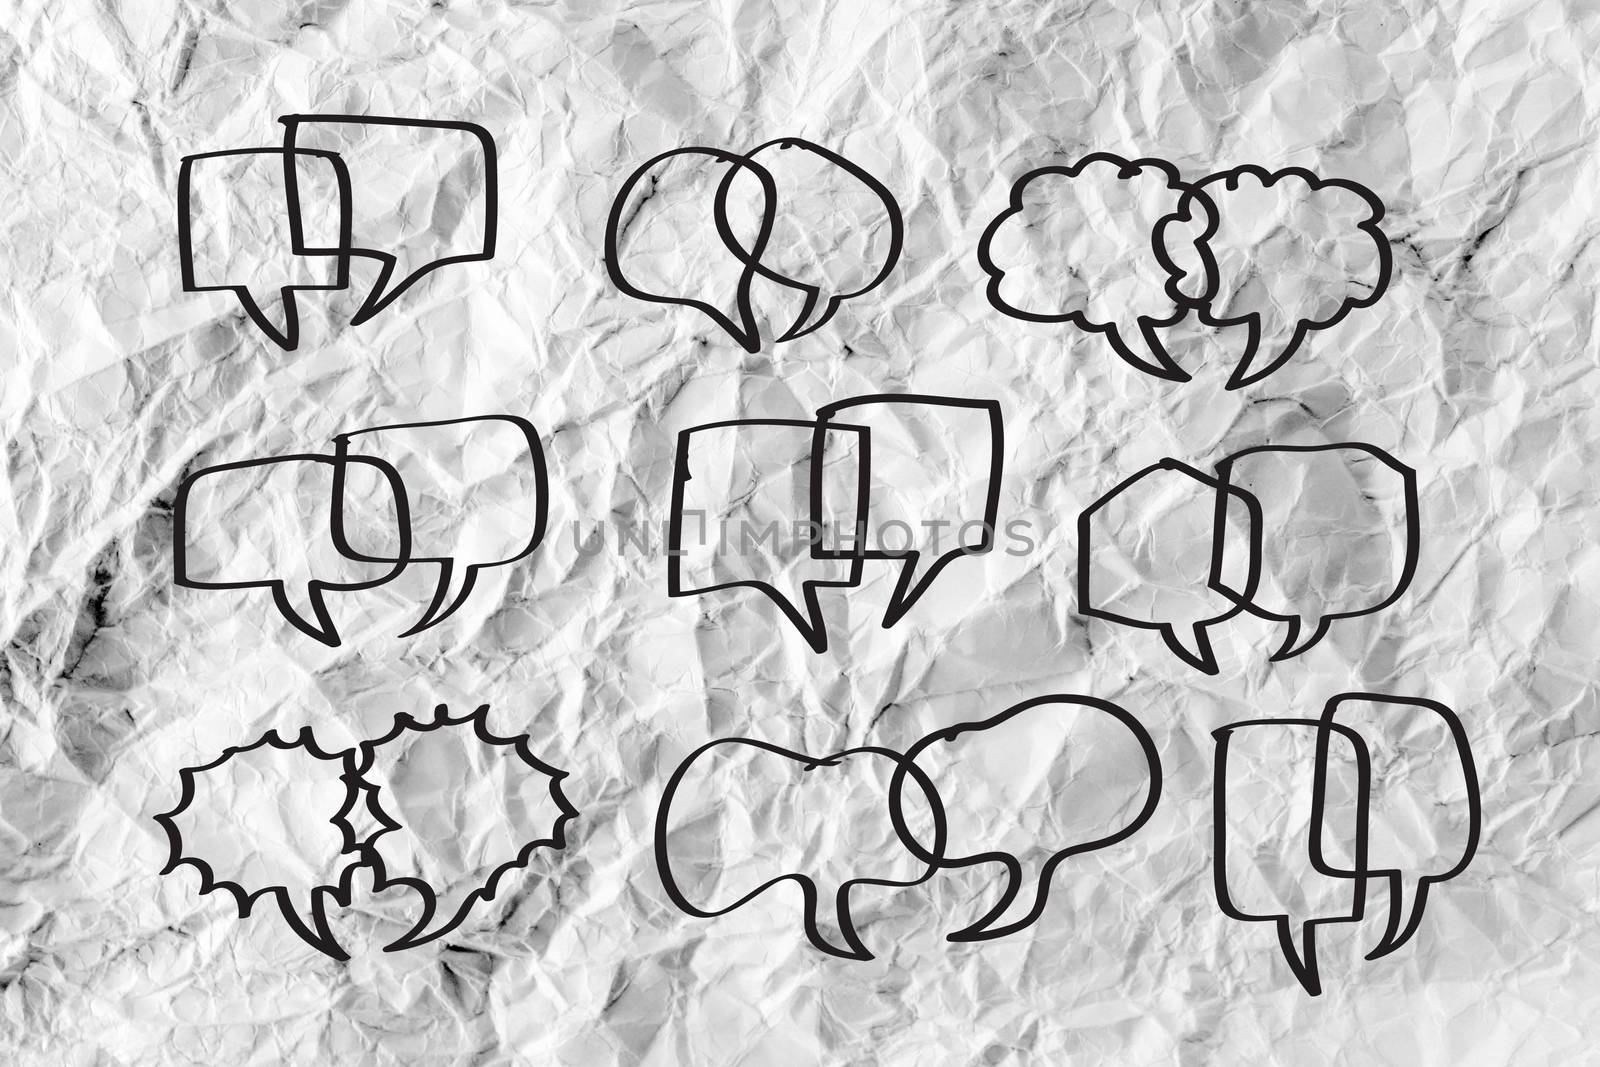 Speech Bubble Sketch hand drawn bubble speech idea design on crumpled paper